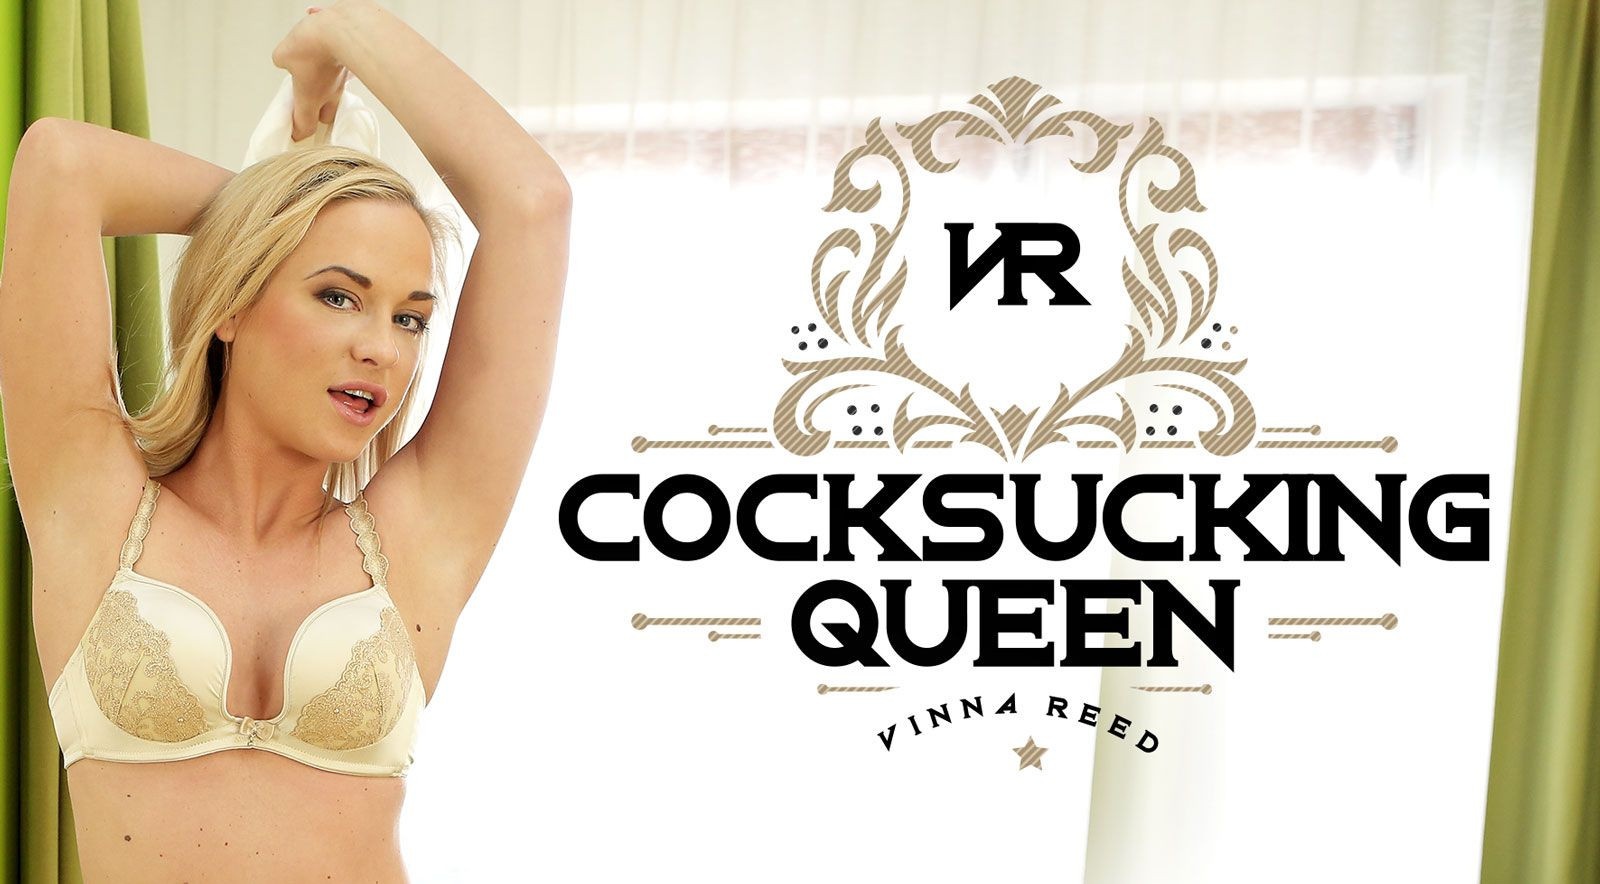 The Cocksucking Queen: Vinna Reed Slideshow